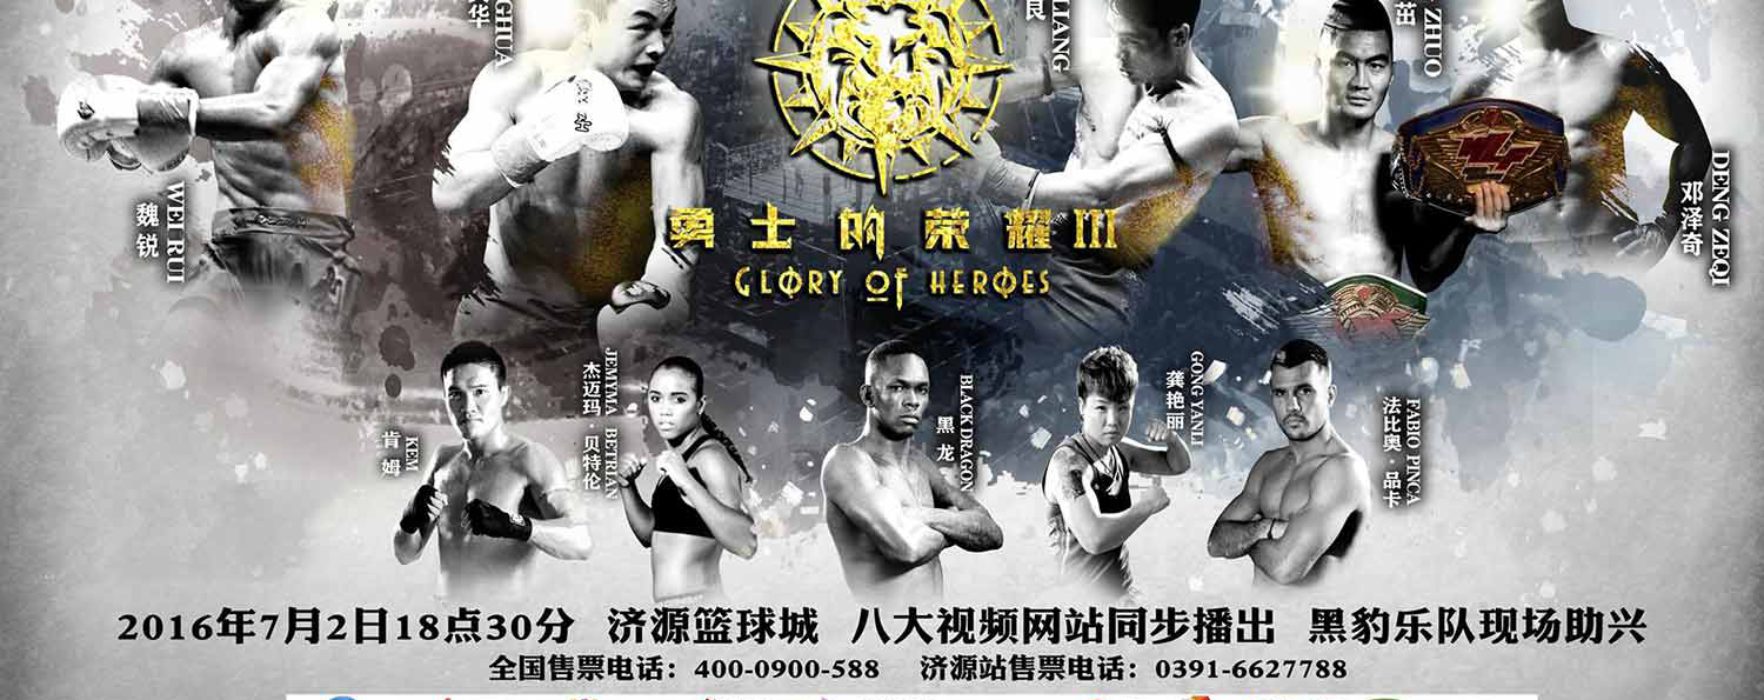 Card (updated): Kem, Pinca, Armin, Fukai, etc at Glory of Heroes 3 – China – 2 July 2016